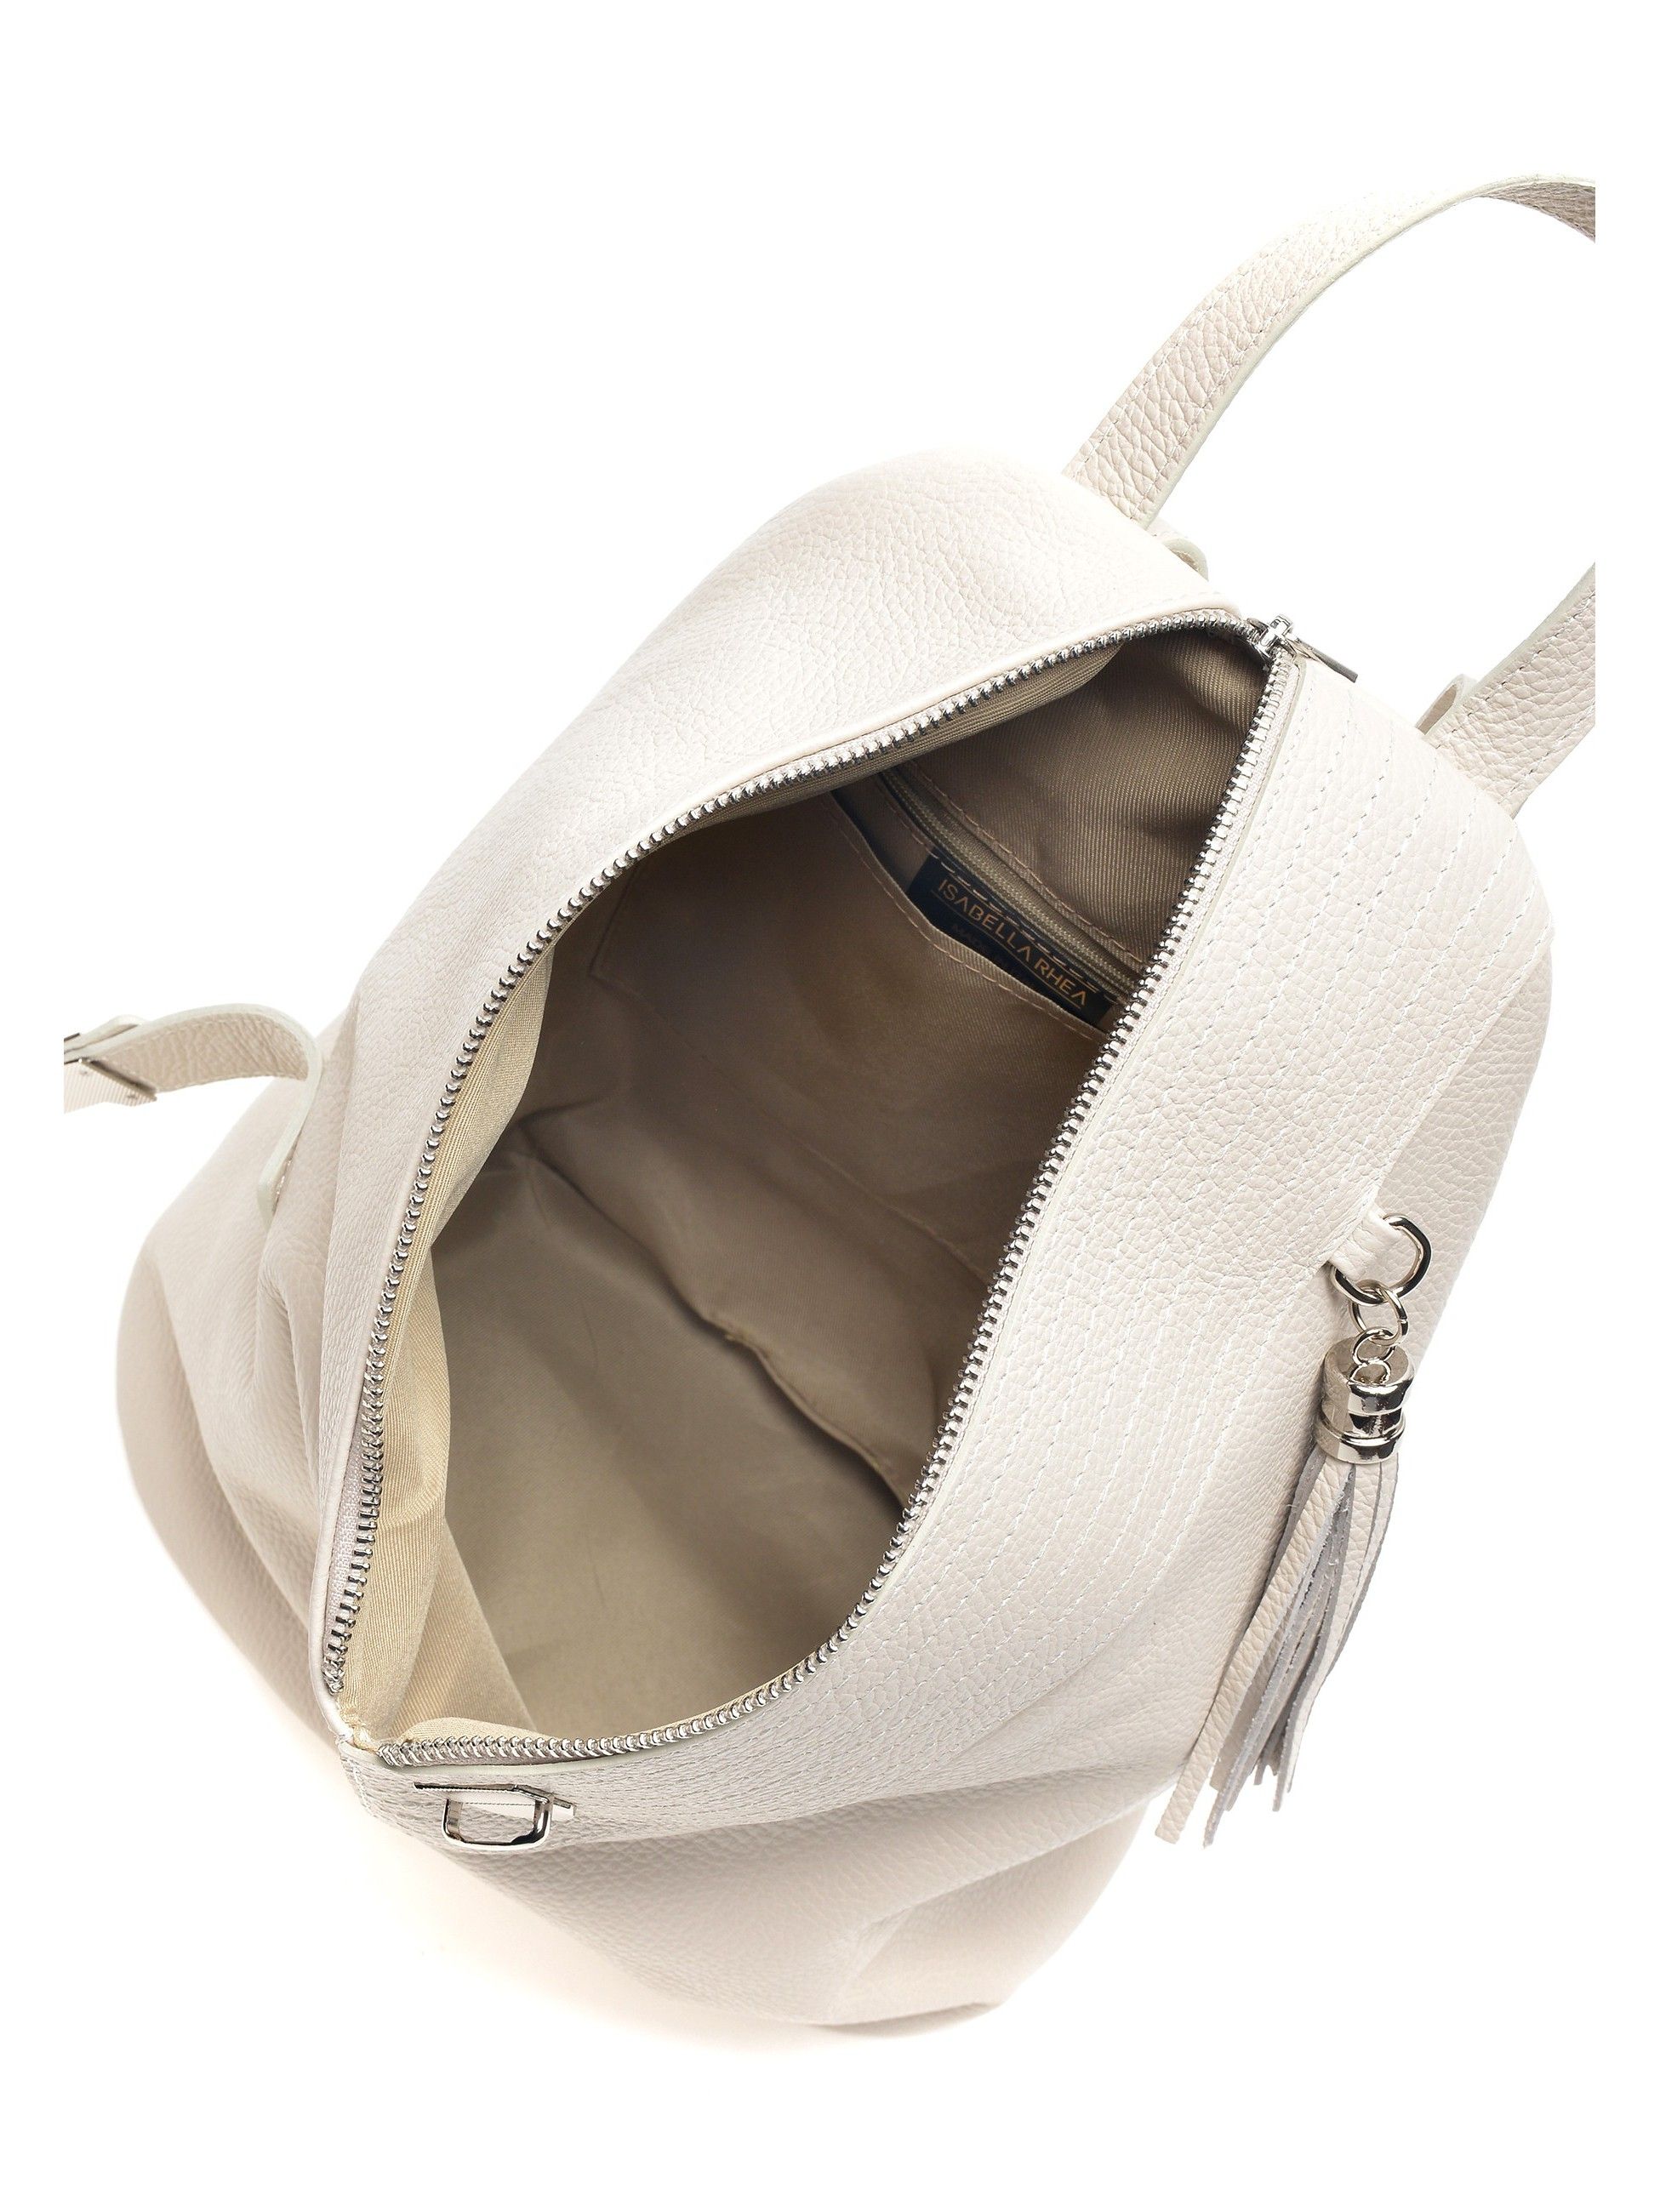 Backpack
100% cow leather
Front zip closure
Inner zip pocket
Back zip pocket
Tassel detail
Dimensions (L): 43.5x35x17 cm
Handle: 24cm
Shoulder strap: 80cm x 2 cm